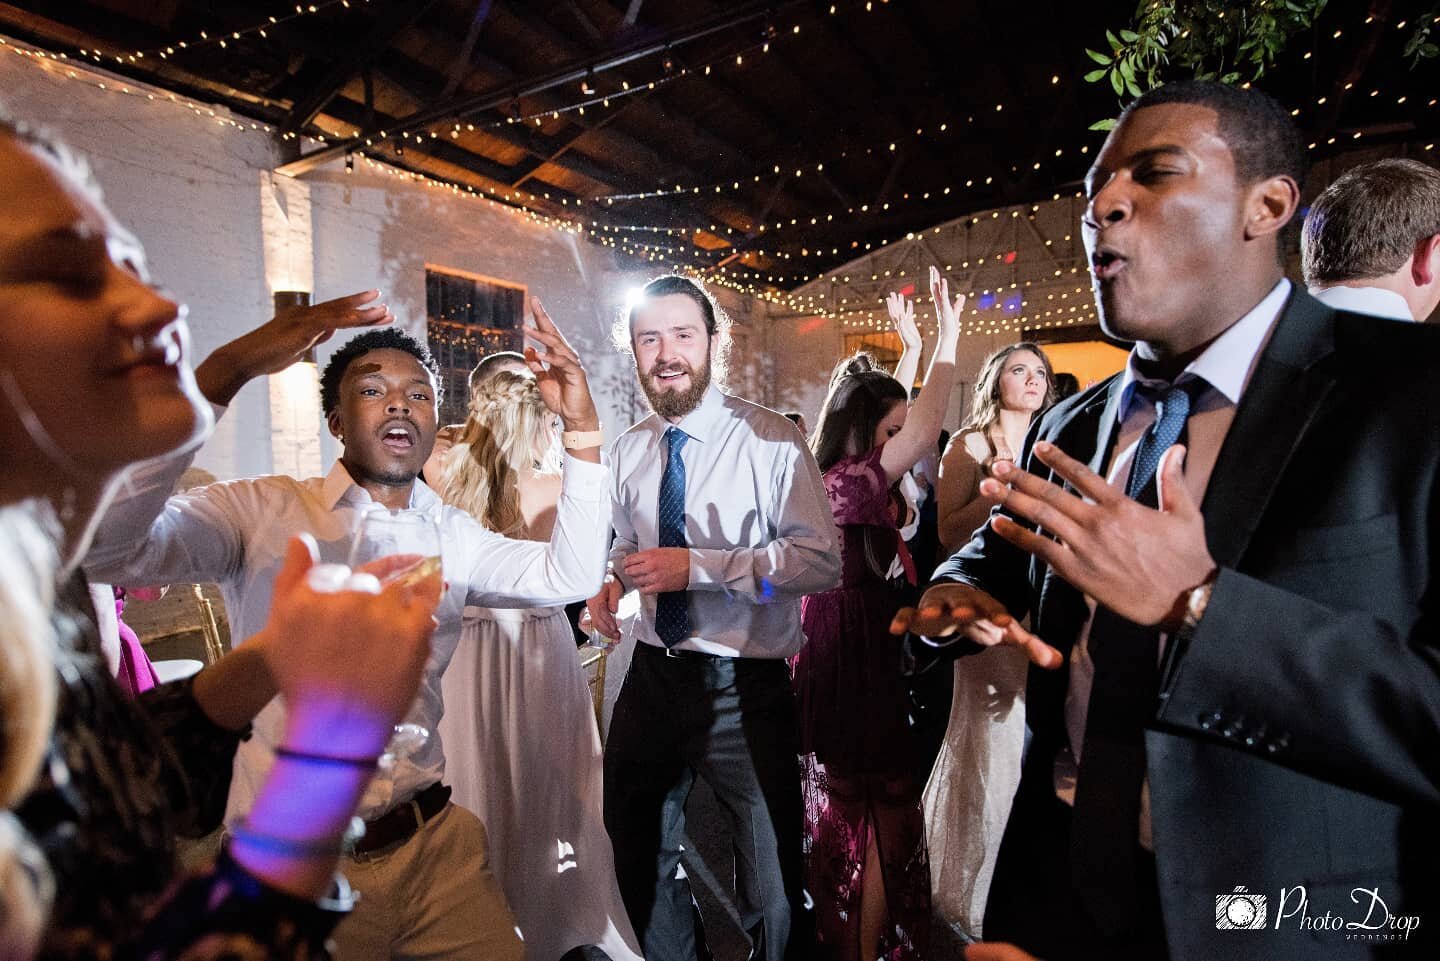 You wedding should be the time of your life! 📷: @photodropweddings
💒: @brickyardmarietta 🎶: @mixwirepro

#wedding #atlweddingdj #atlantaweddings #weddingreception #weddingplanner #dj #atlantadj #mariettaweddings #atlbraids #party #MixWireDJ